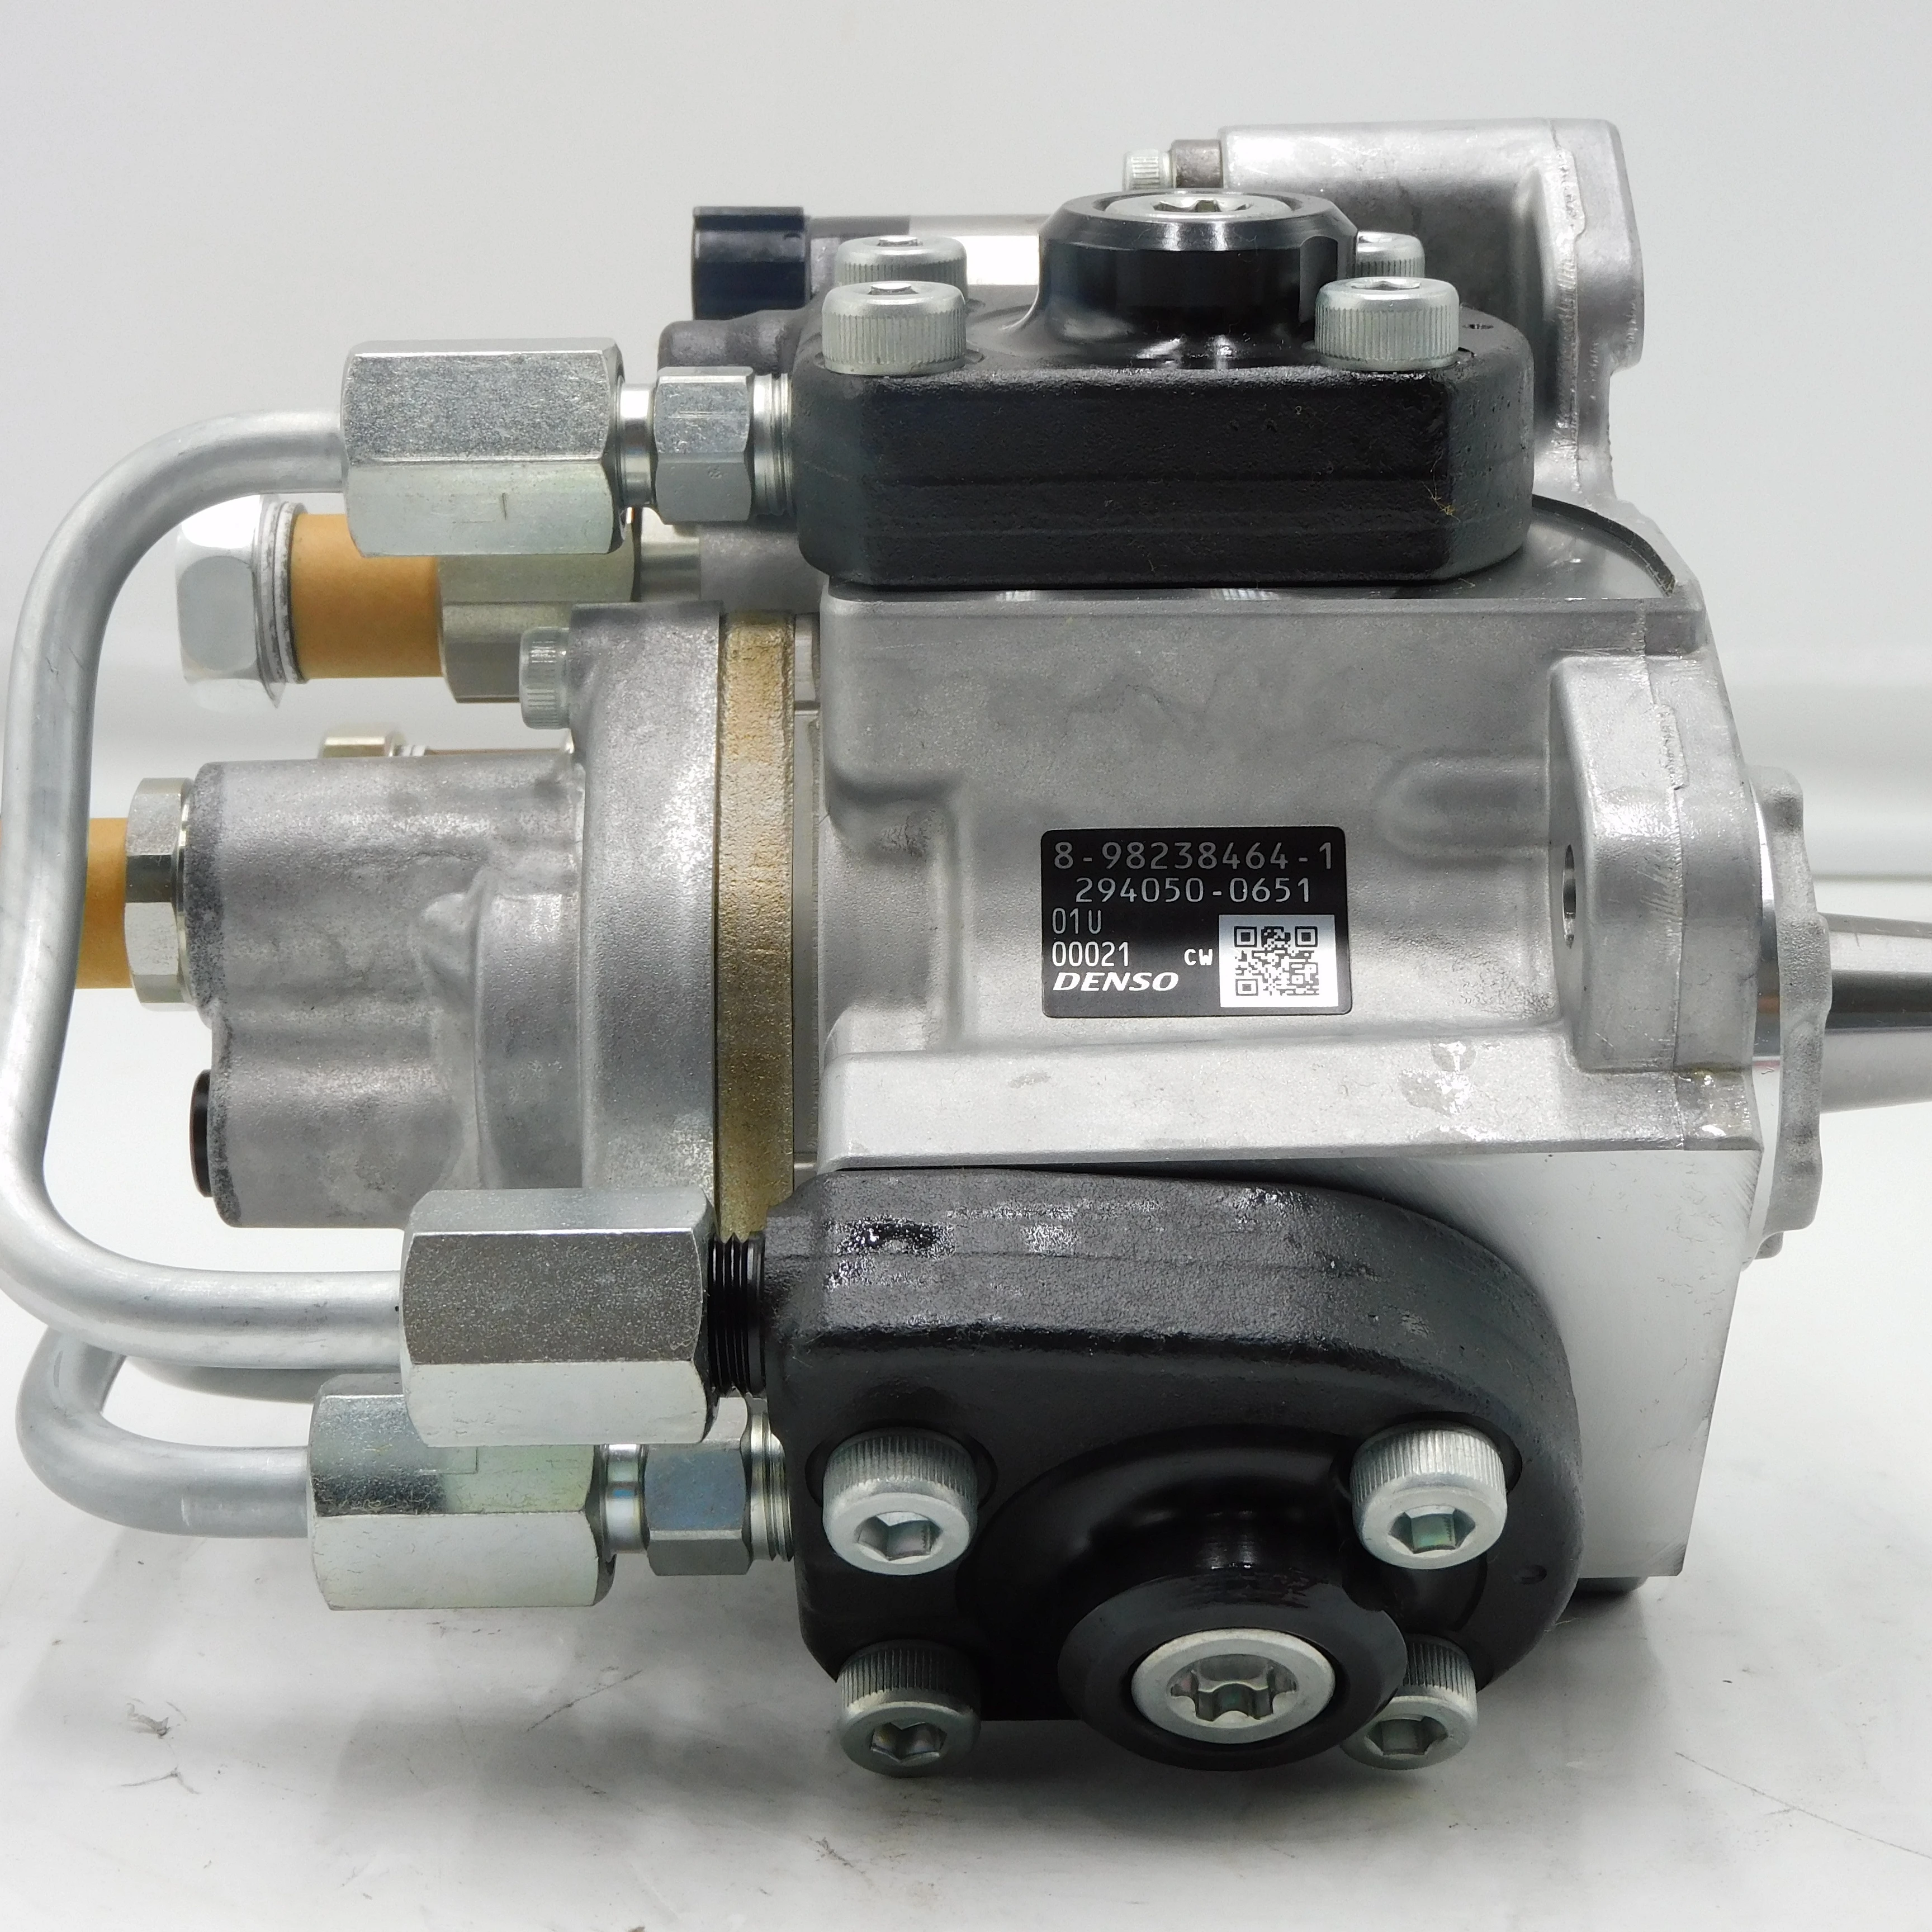 Original 6HK1SKSA01/02 Fuel Injection Pump 294050-0650 8 